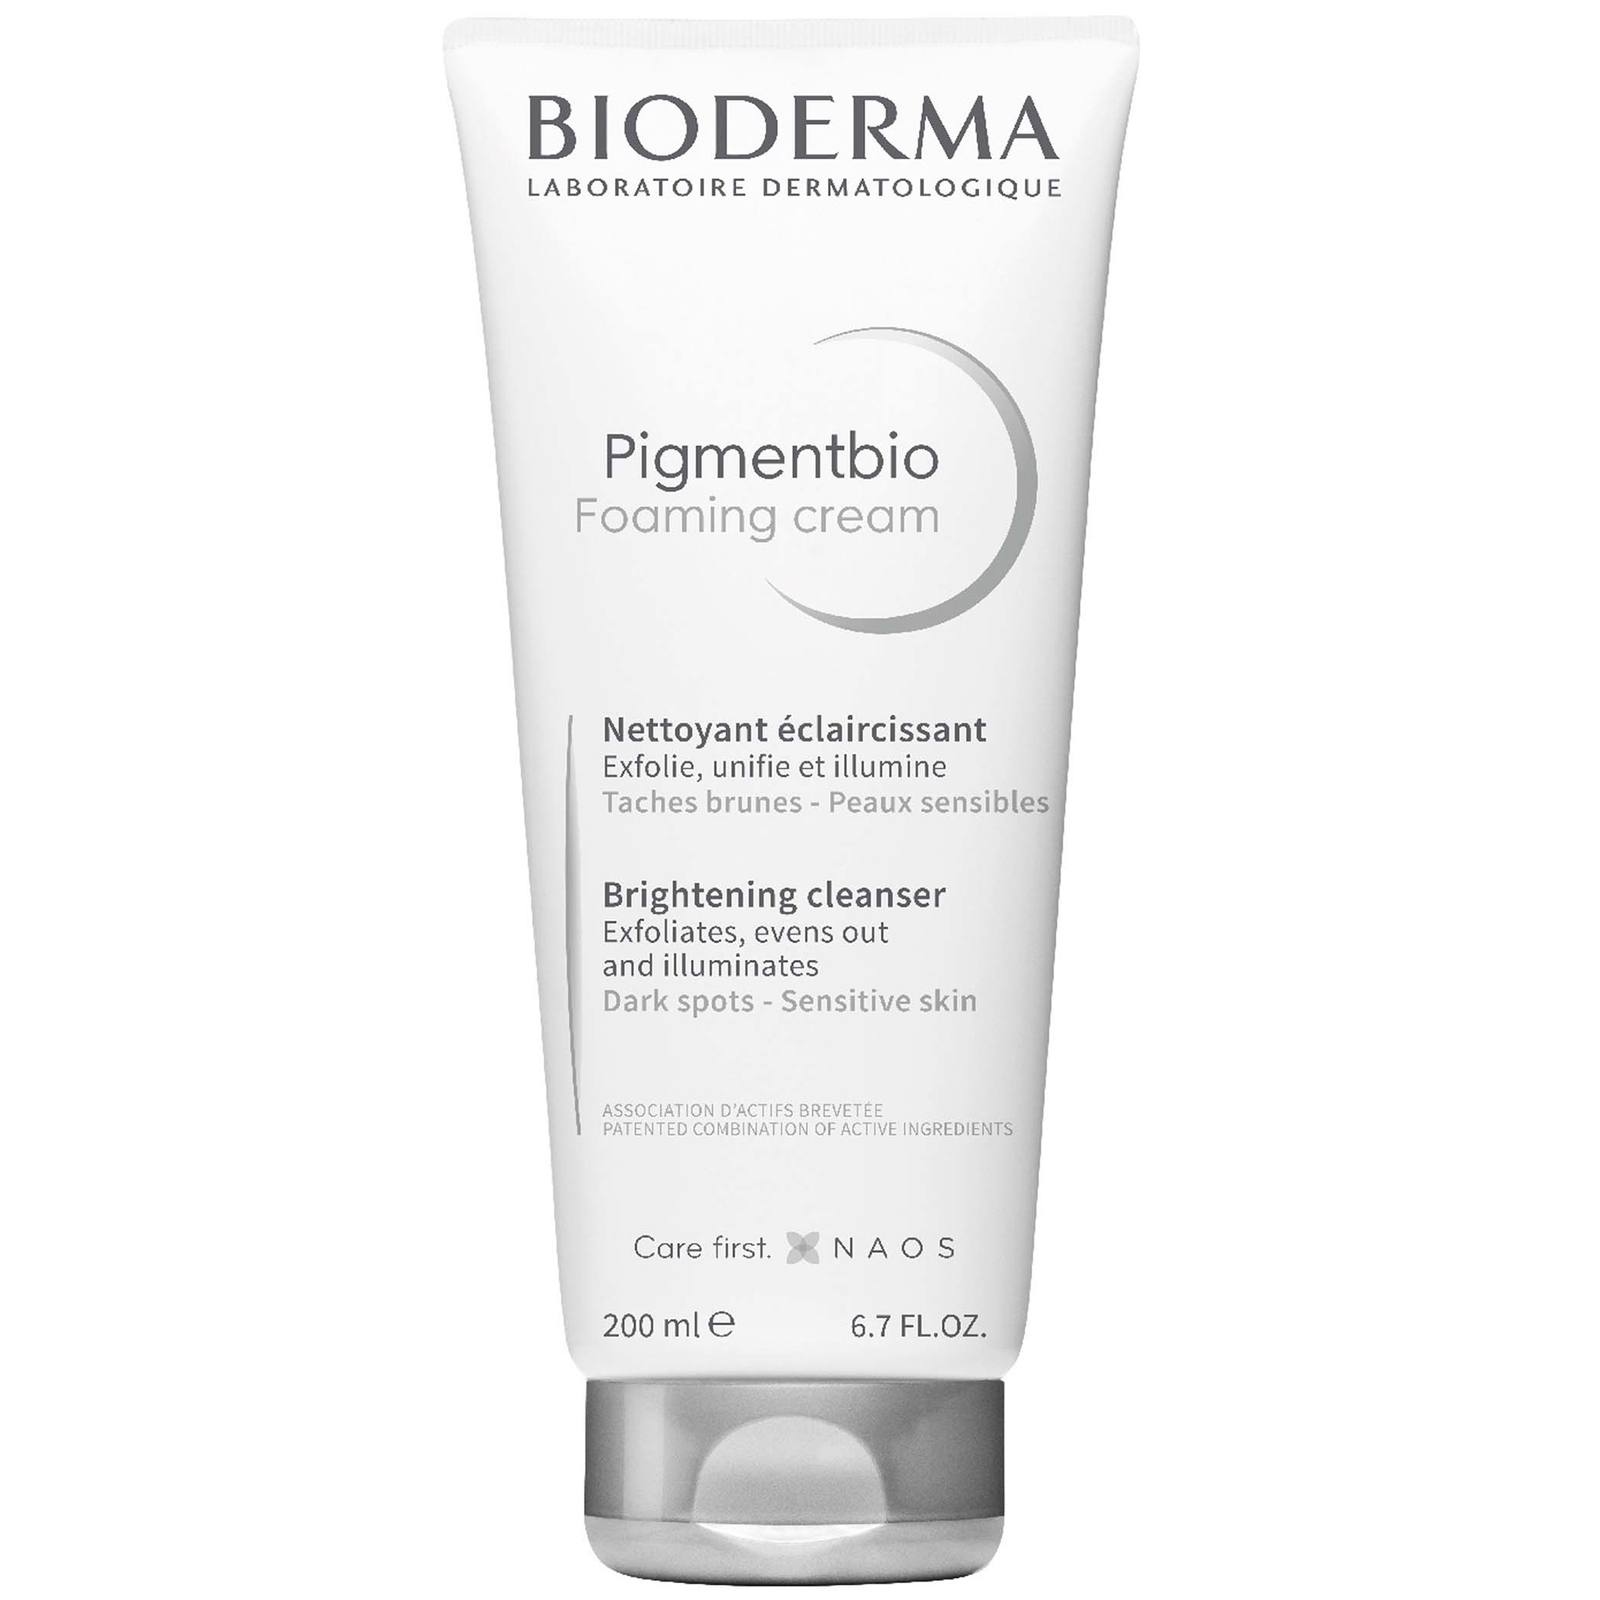 Photos - Facial / Body Cleansing Product Bioderma Pigmentbio Brightening and Exfoliating Cleanser Anti-Dark Spot 20 